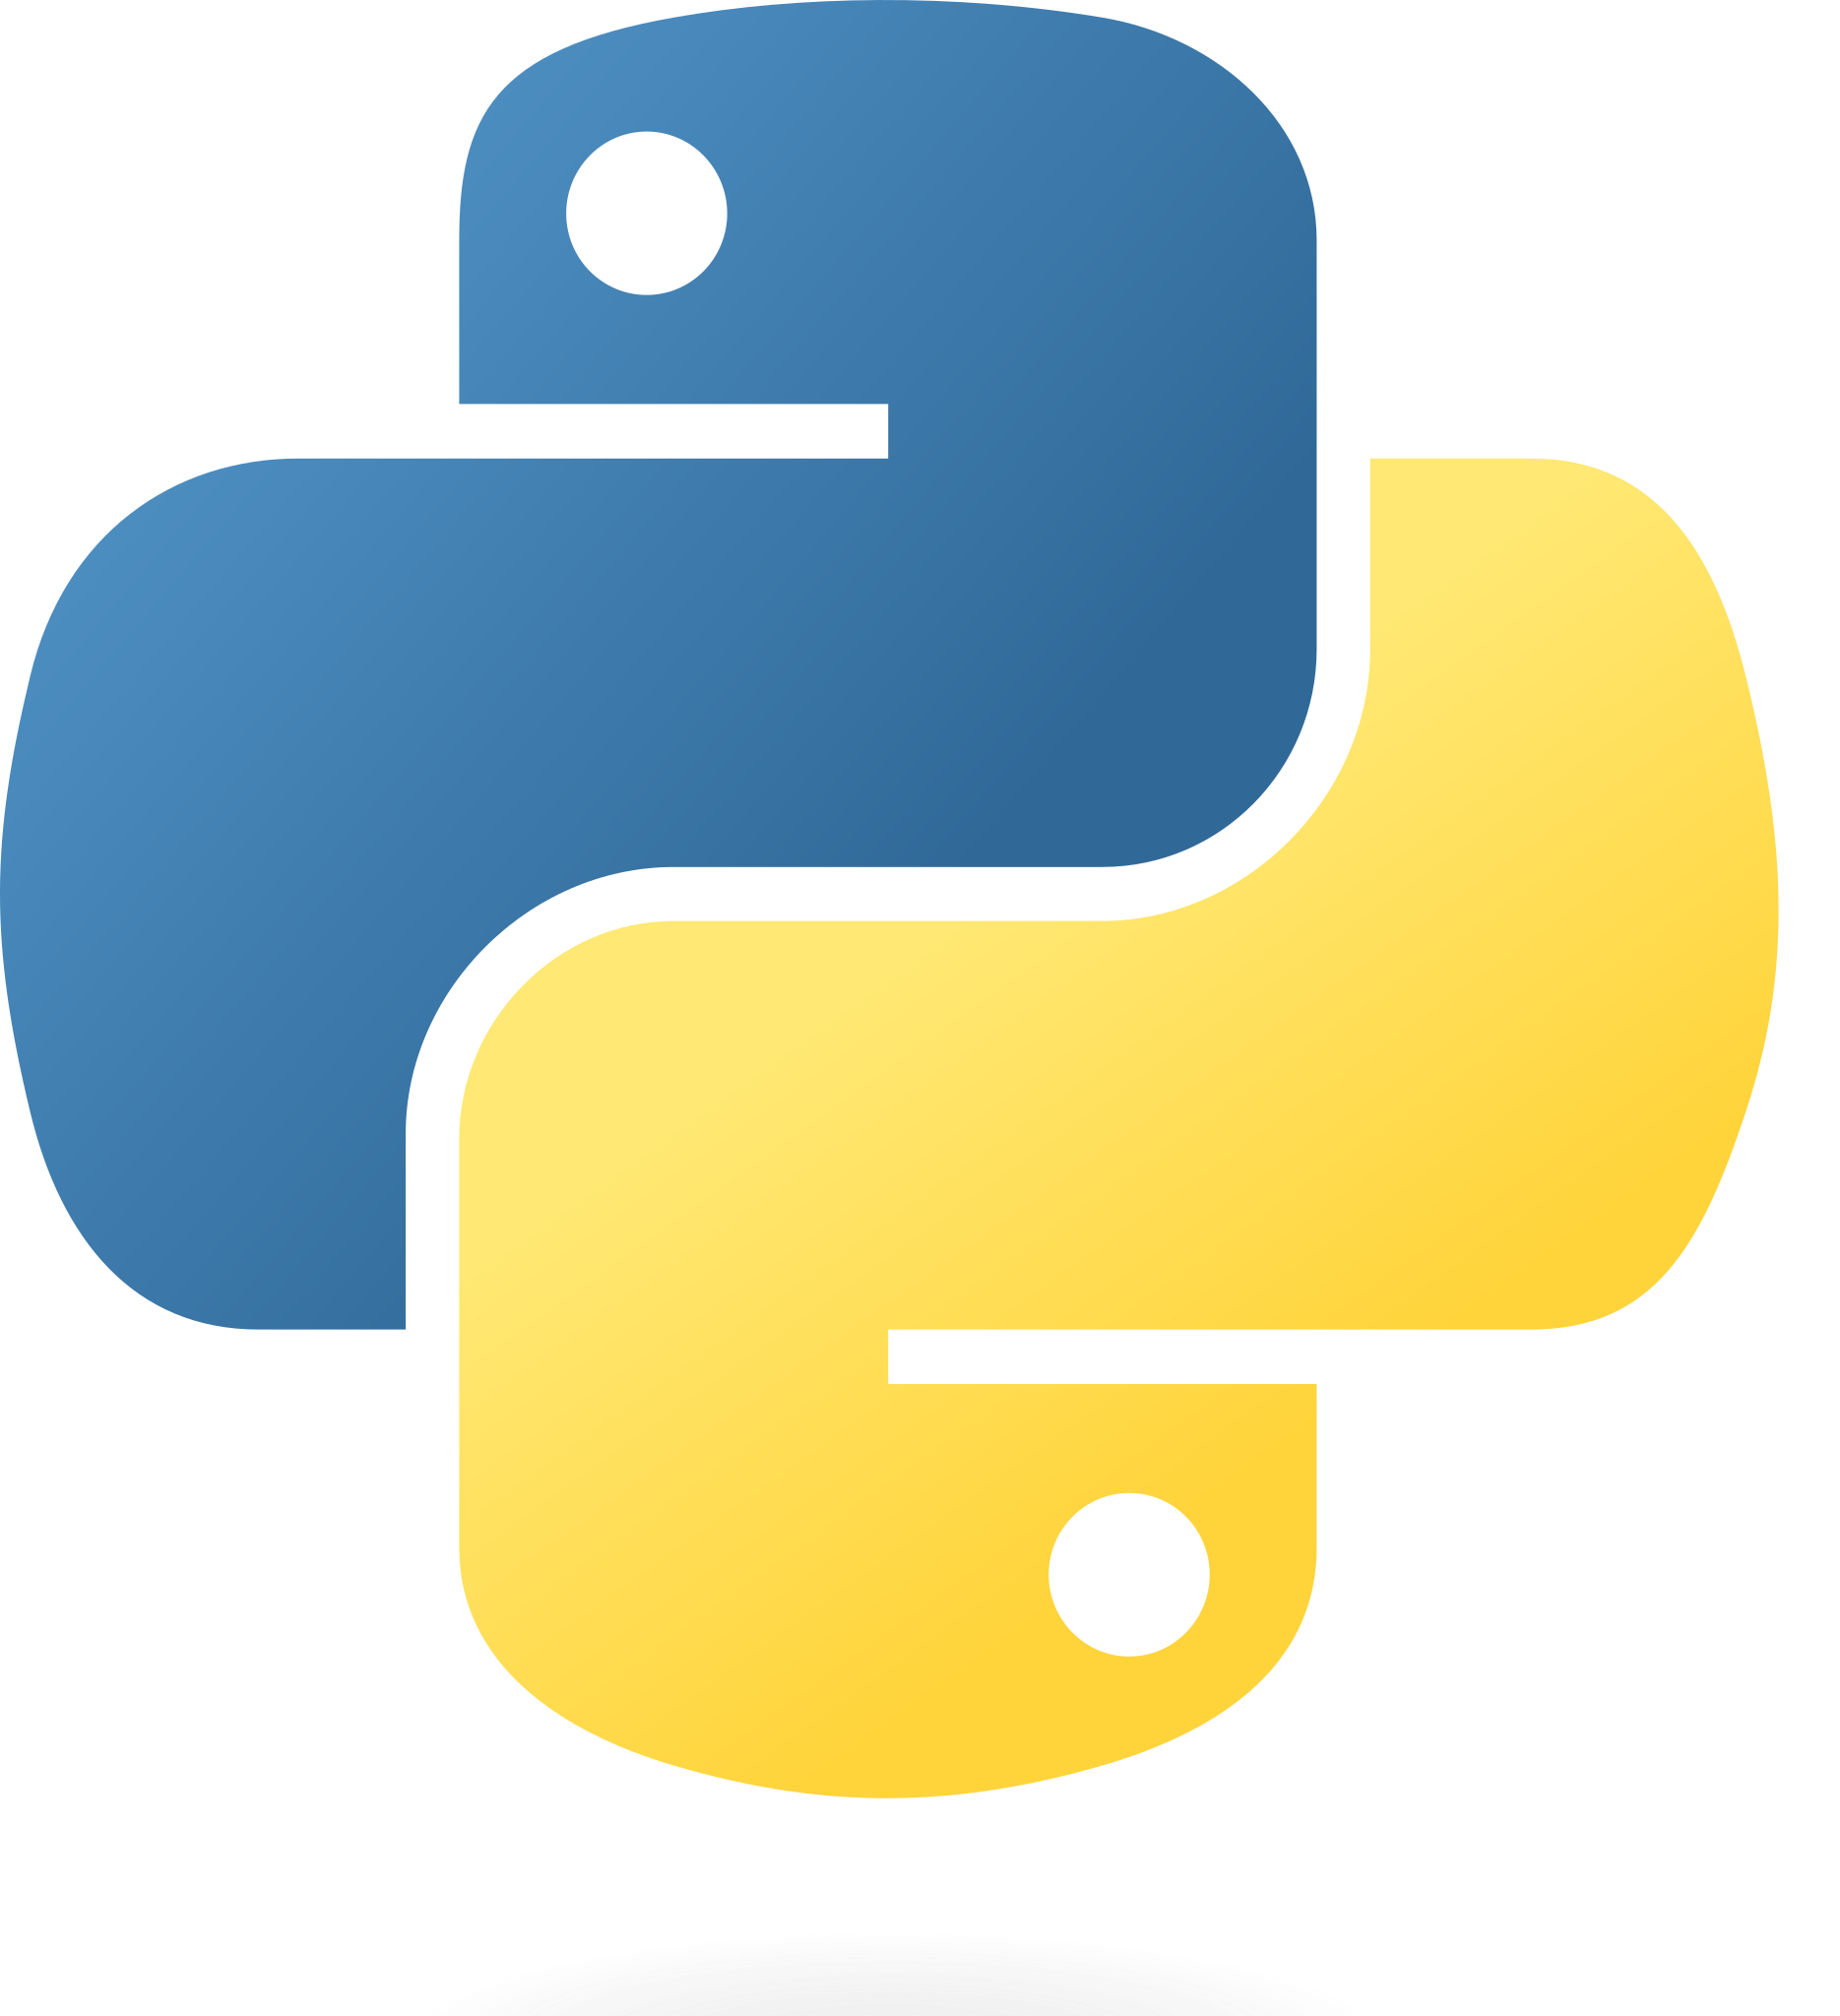 logo of Python